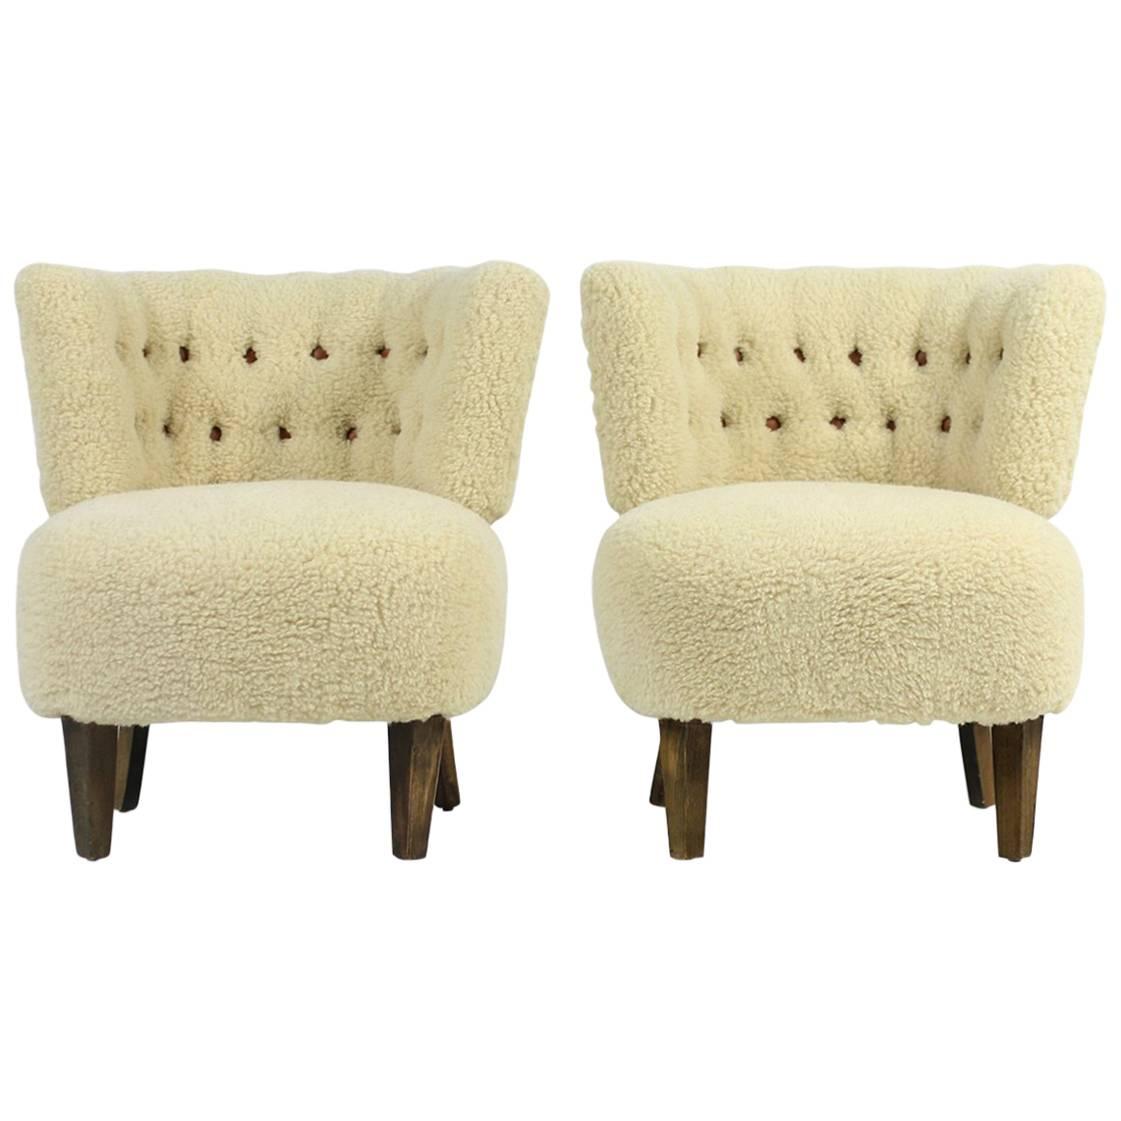 Pair of 1950s Otto Schultz Lounge Chairs Sheepskin & Leather, Mid-Century Modern